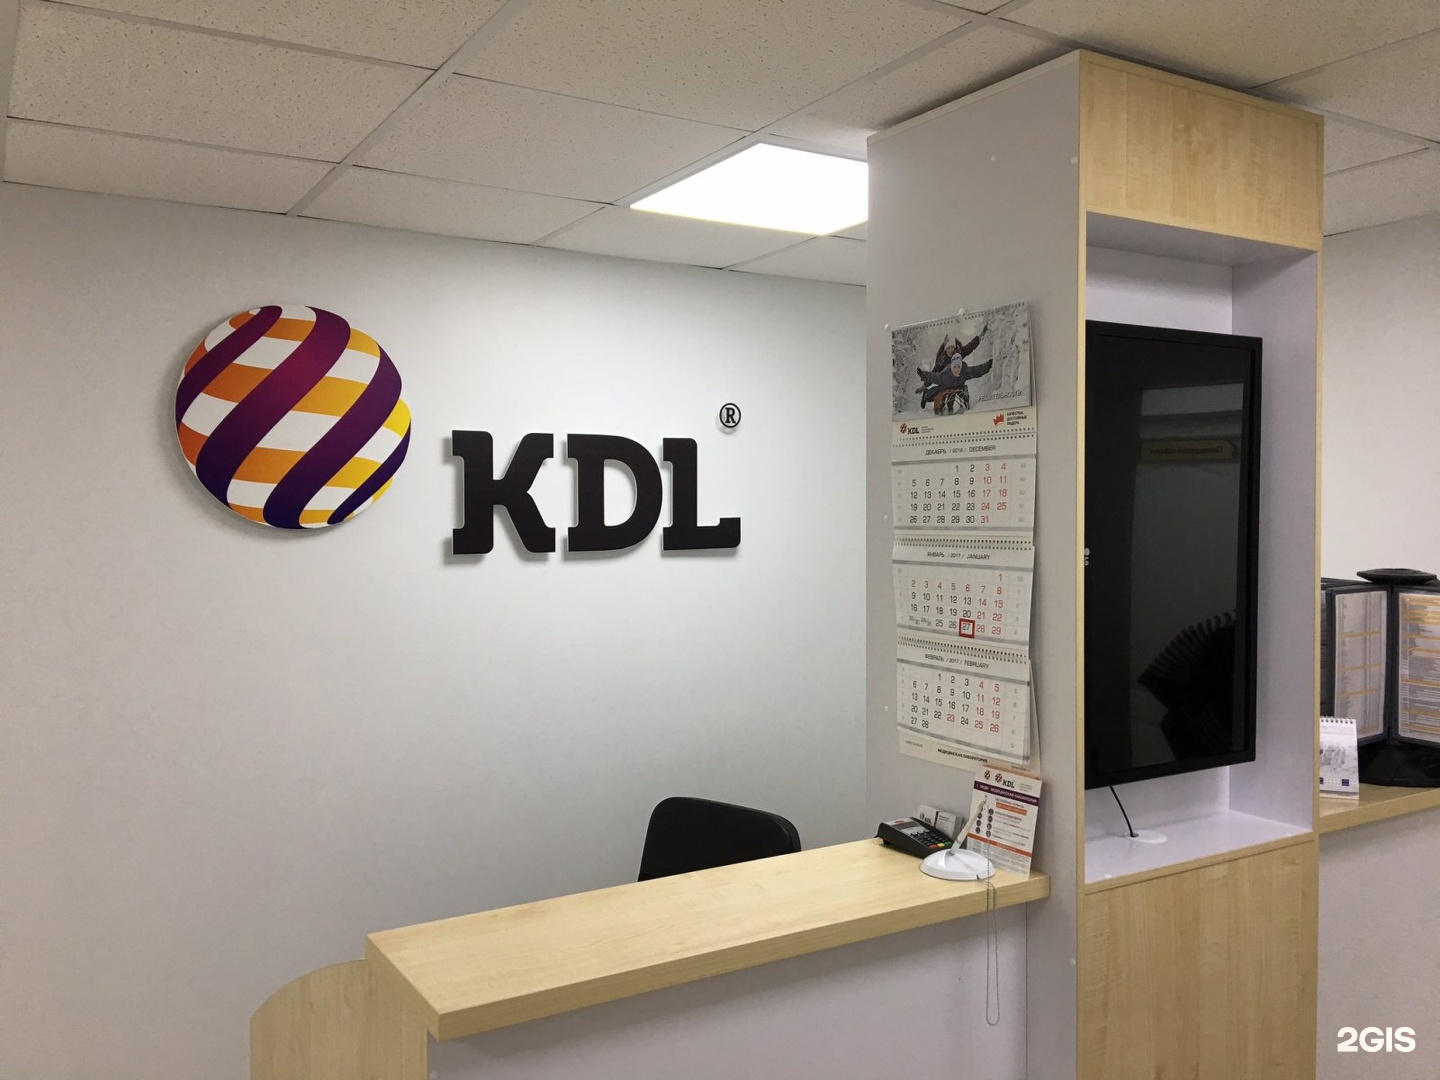 Кдл сириус. КДЛ лаборатория Омск. KDL логотип. Эмблема КДЛ лаборатории. KDL В Омске.